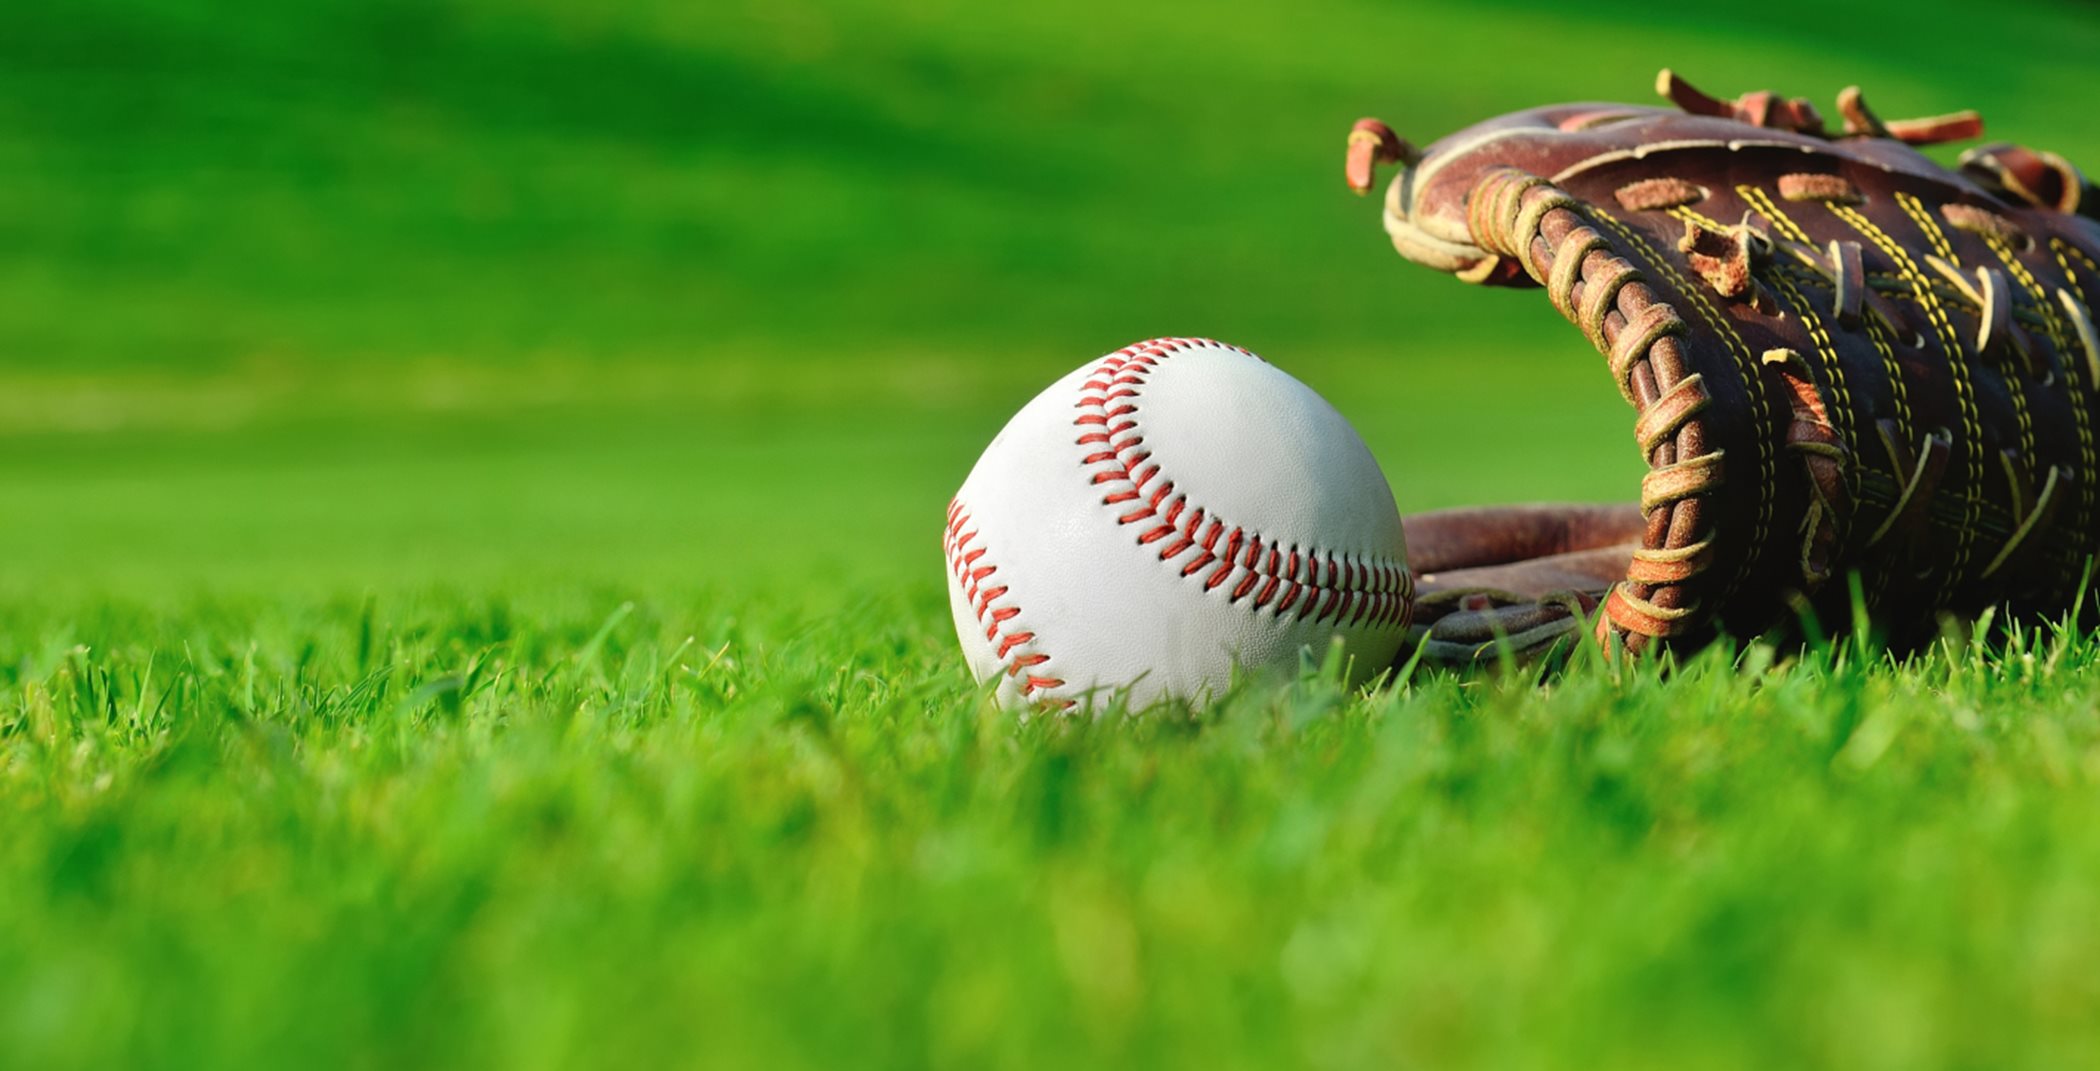 Baseball and mitt on a green field